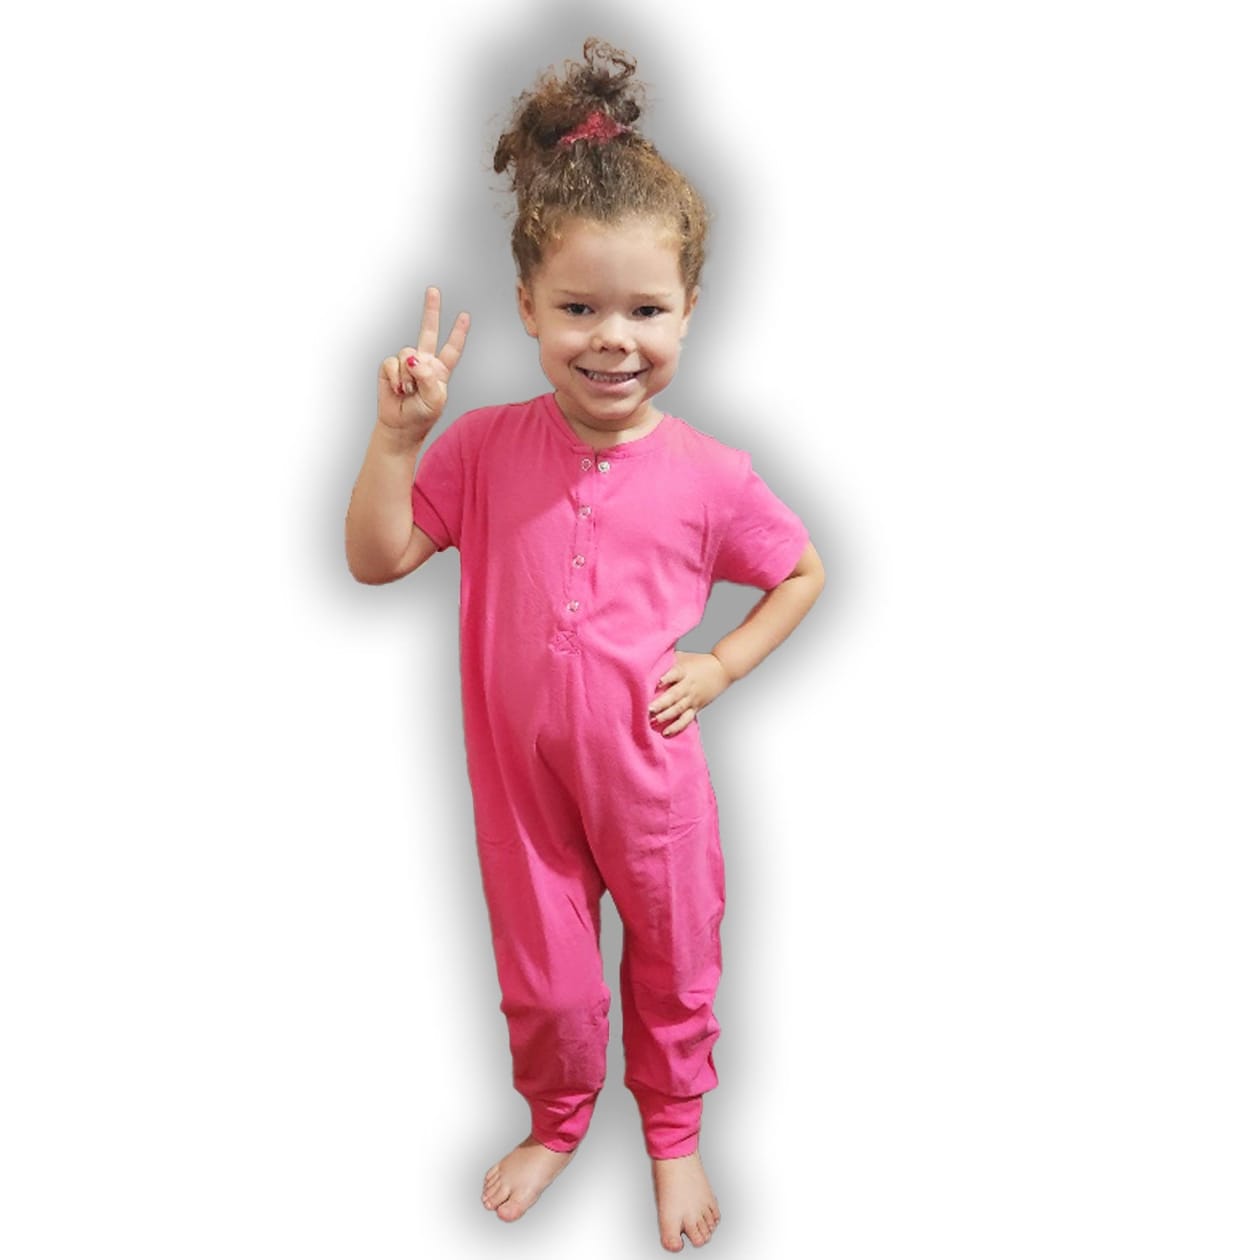 Ultimate Comfort Playsuit - Color: Playful Pink, Size: 2T